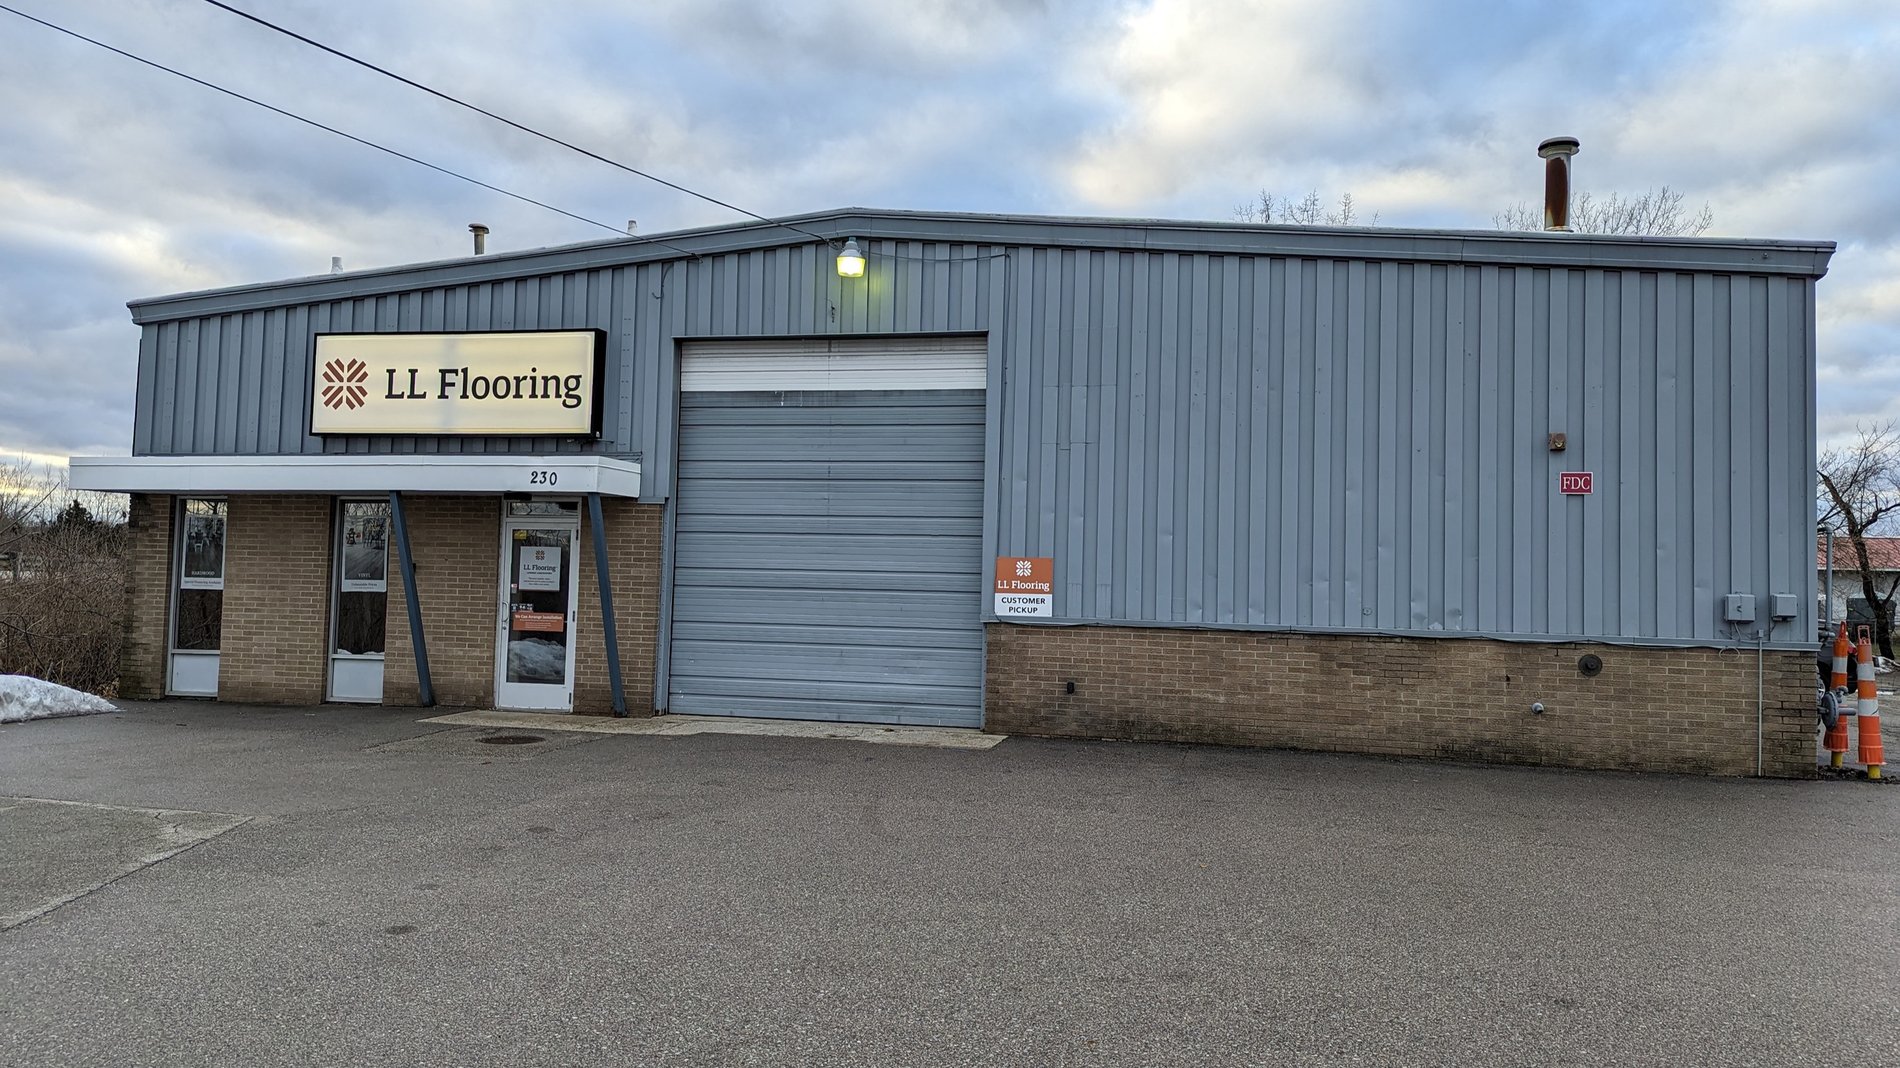 LL Flooring #1072 Comstock Park | 230 Lamoreaux Drive NE | Storefront